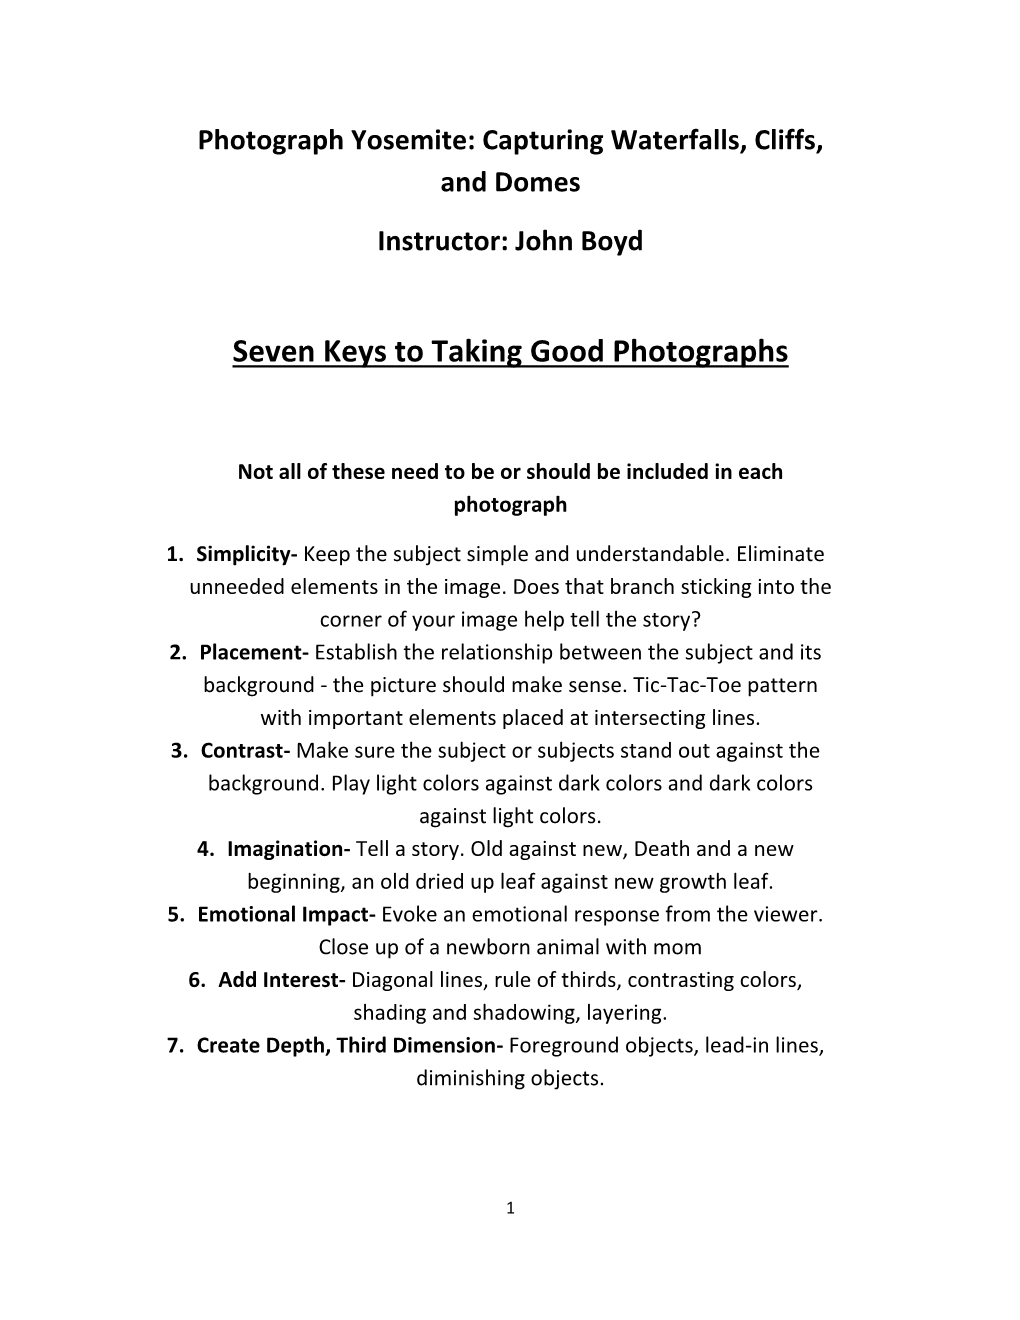 Seven Keys to Taking Good Photographs